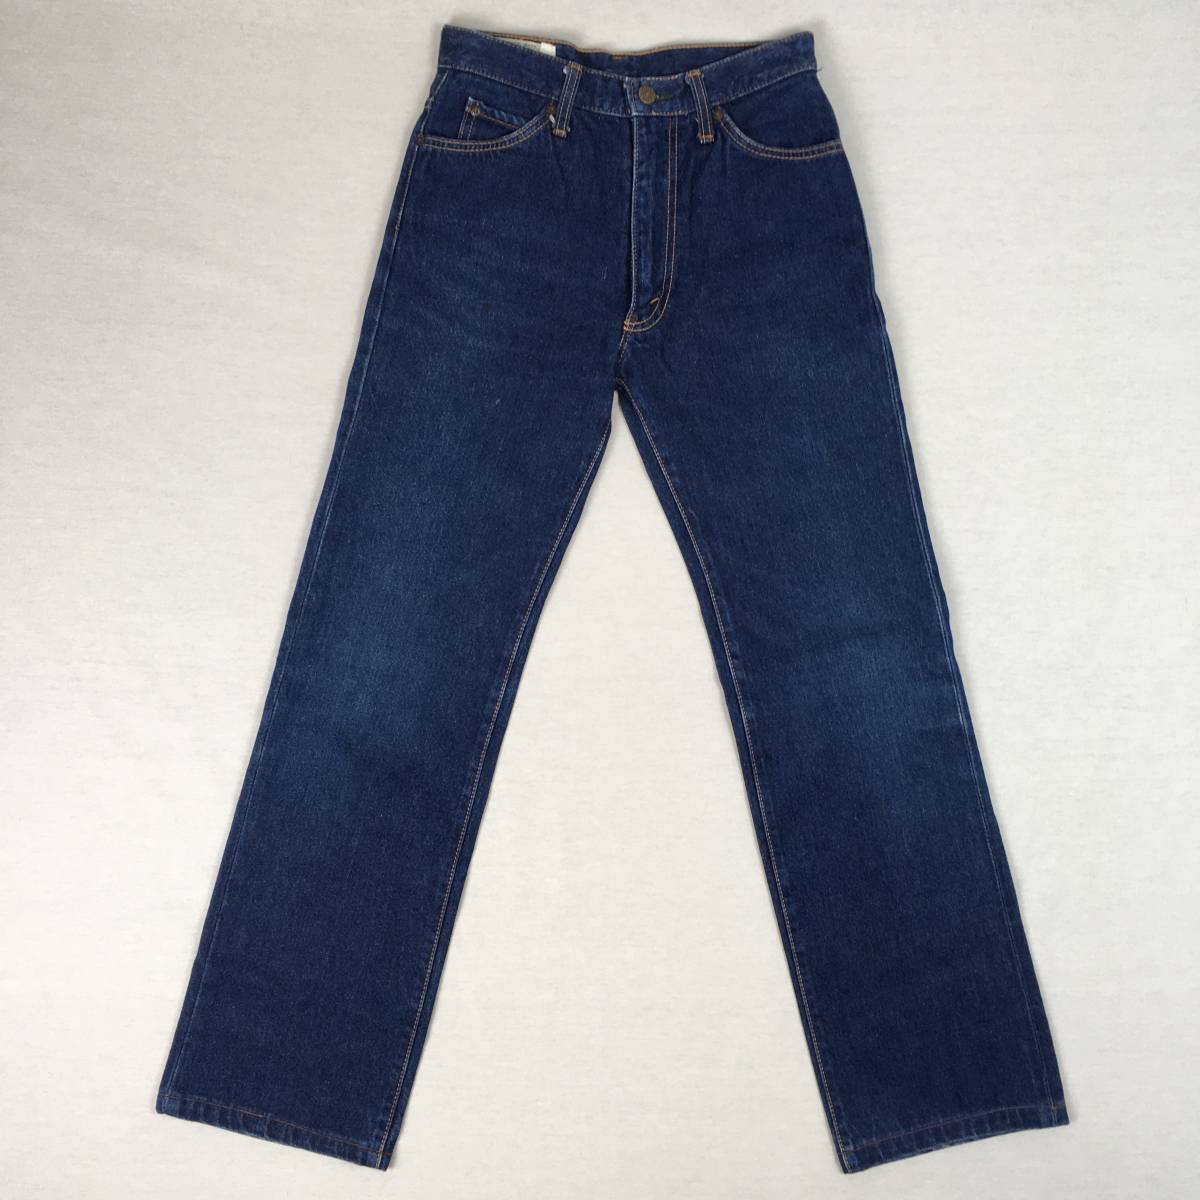 BOBSON Bobson 3627 Denim jeans W28 L32 paper patch Zip fly 